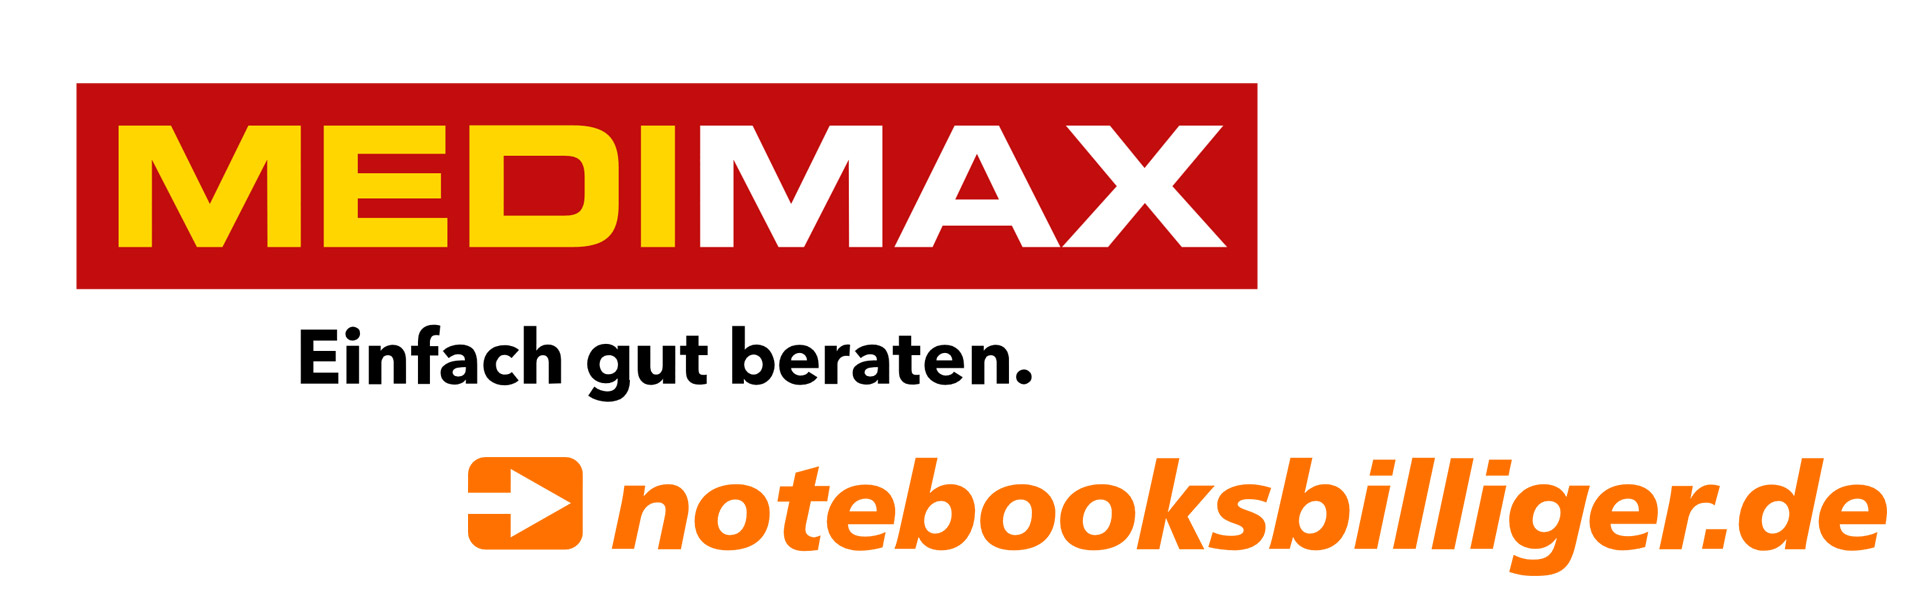 Logos medimax notebooksbilliger-de-collage